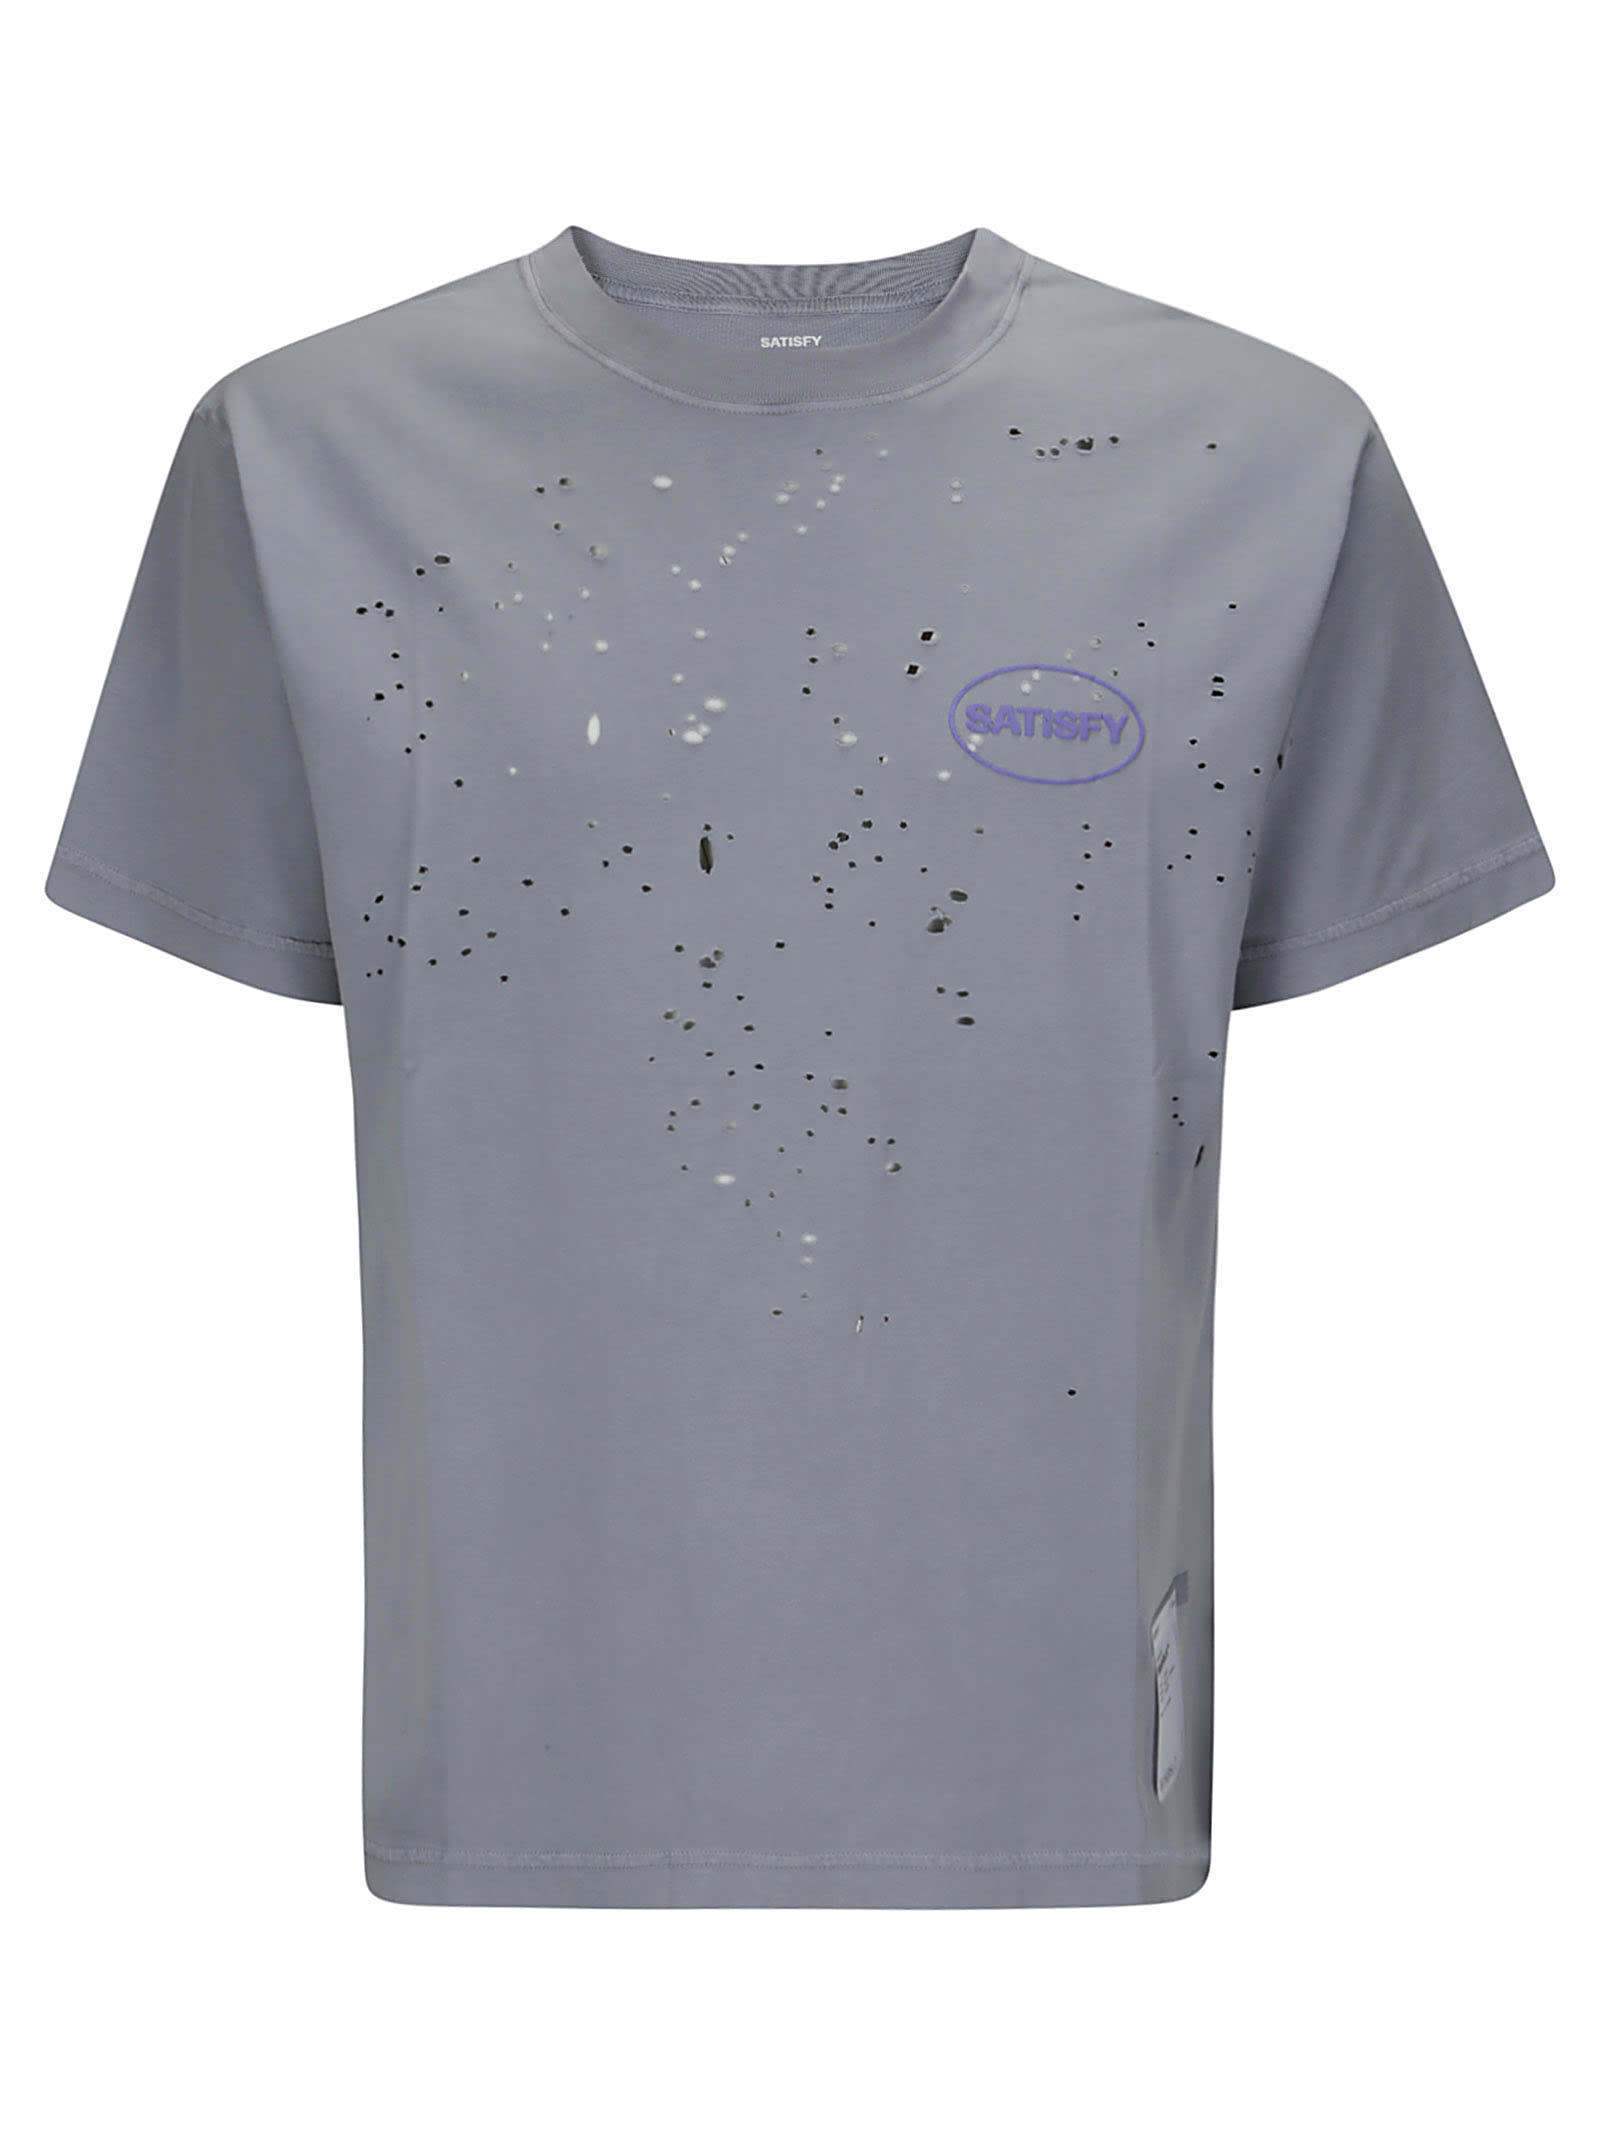 Satisfy Mothtech T-shirt In Gray